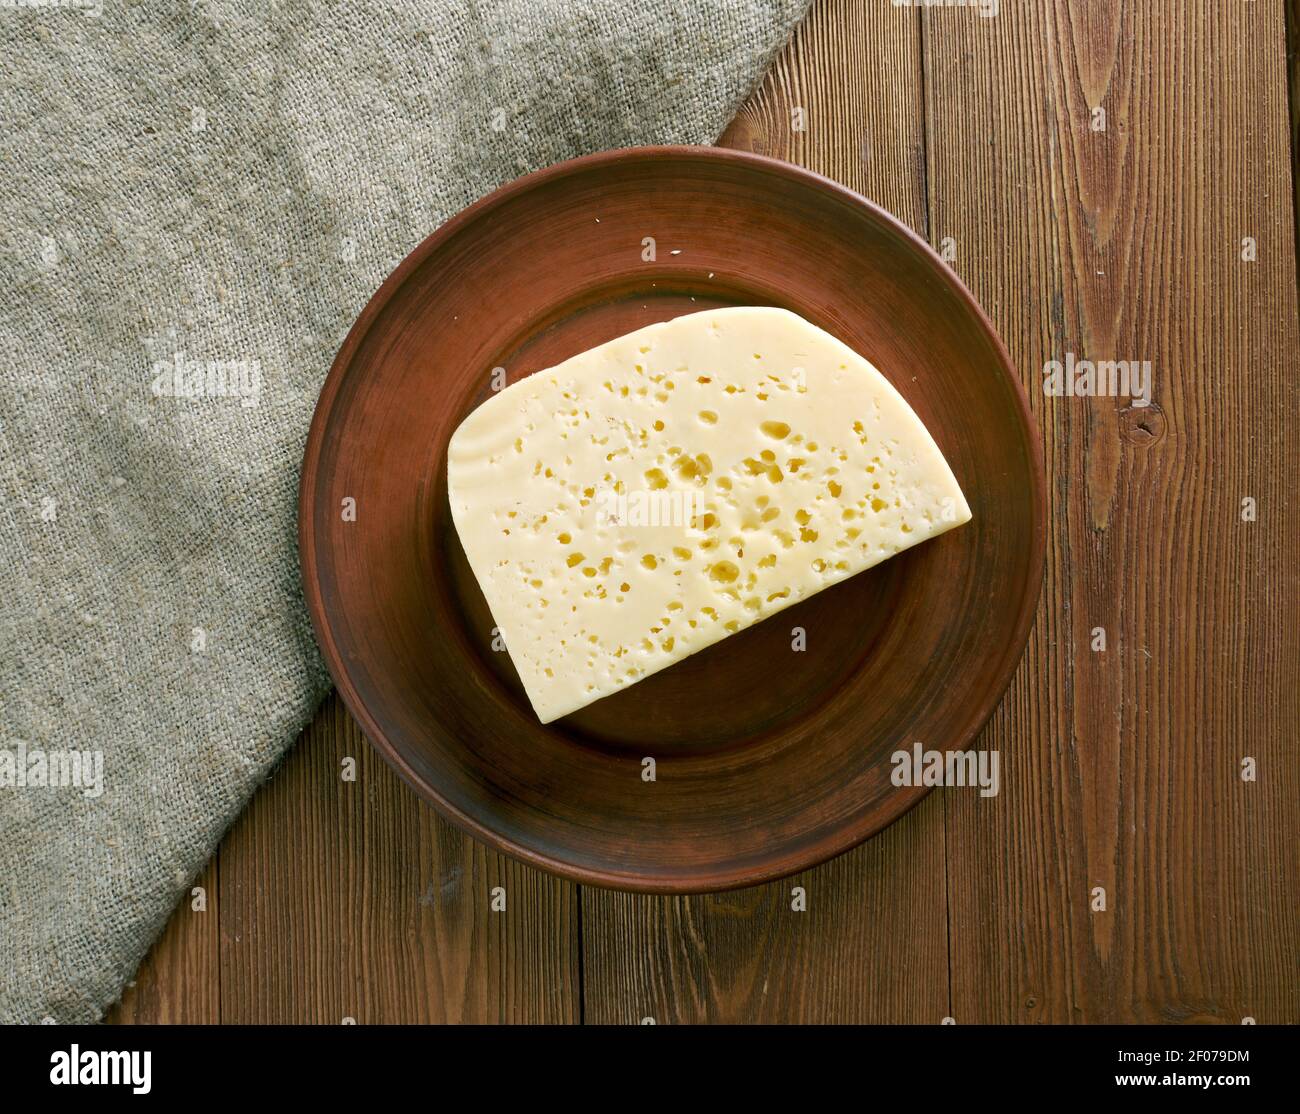 Cheese from Turkey. Stock Photo